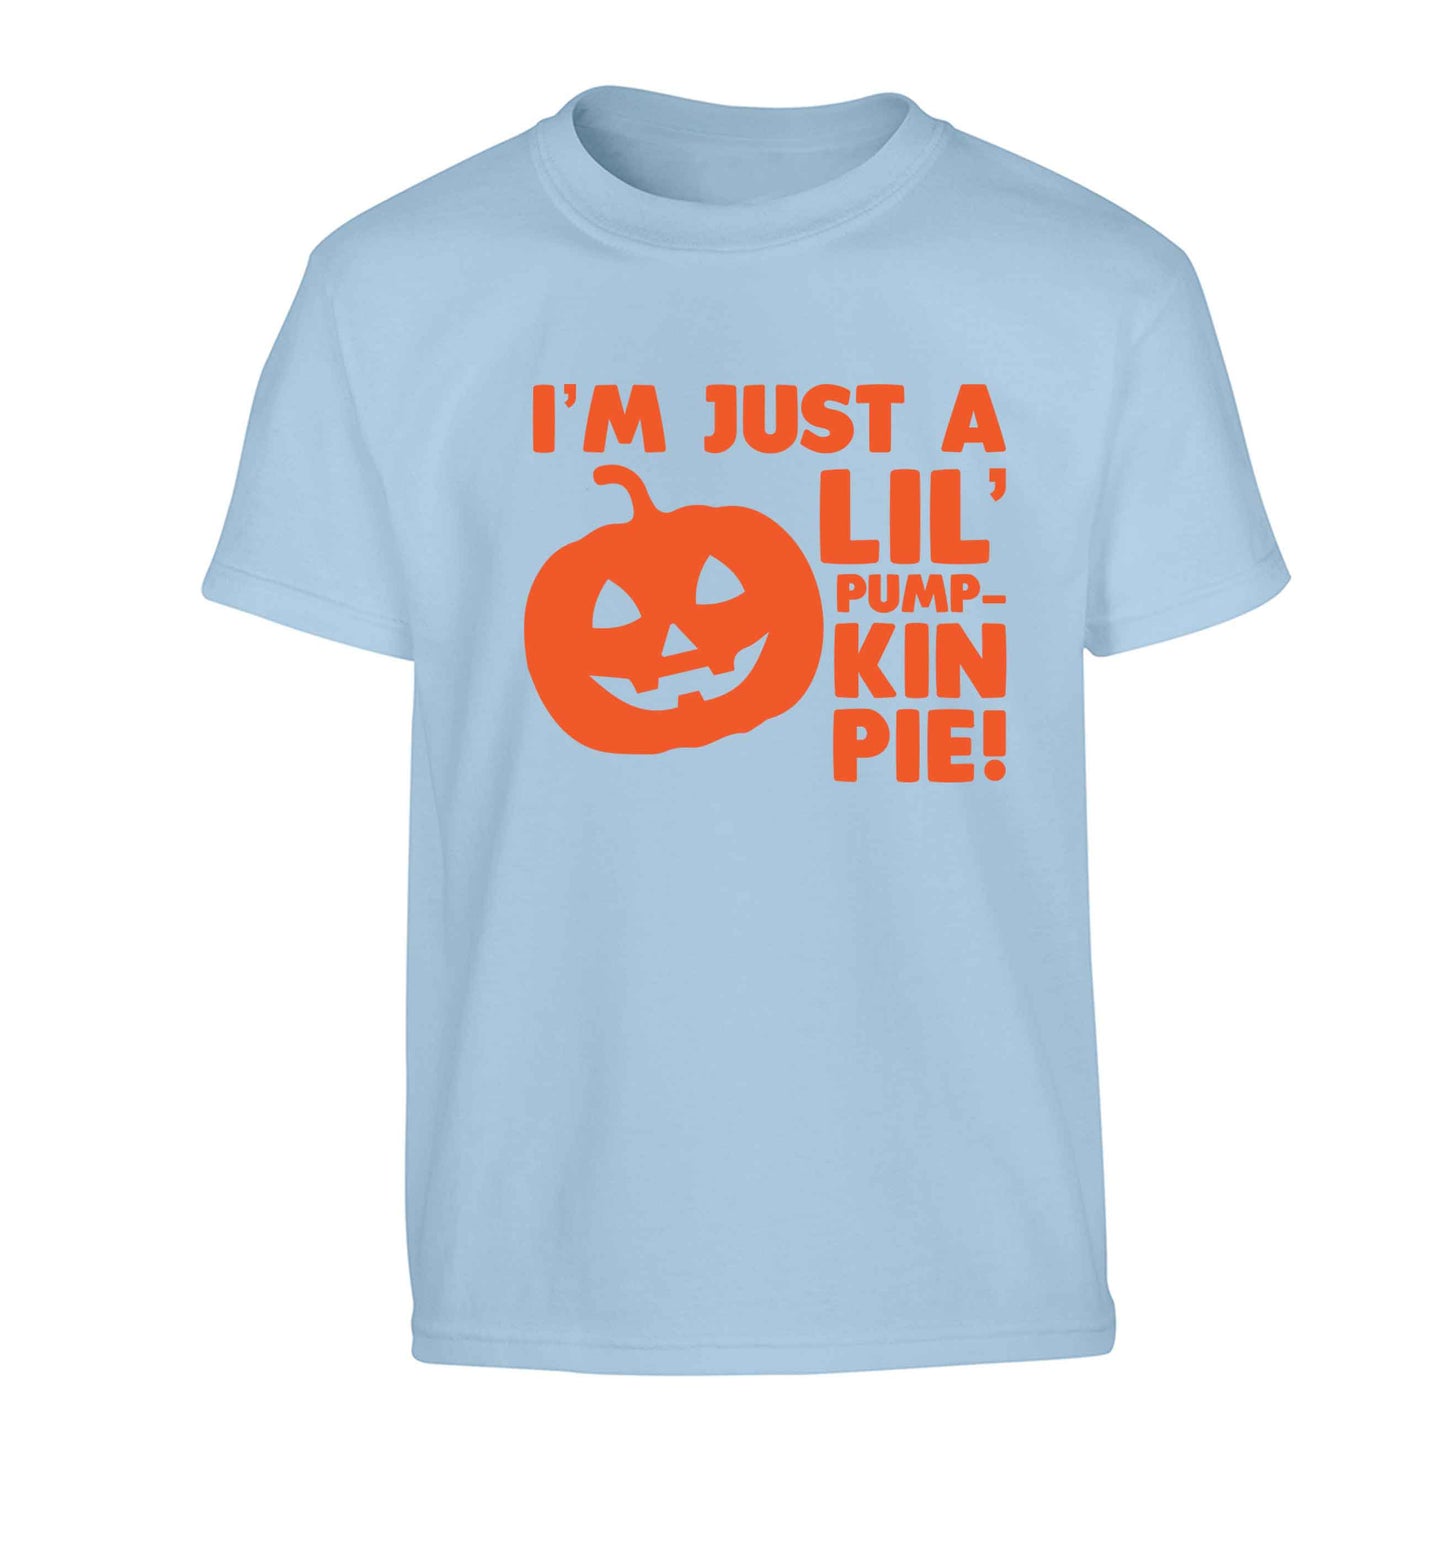 I'm just a lil' pumpkin pie Children's light blue Tshirt 12-13 Years